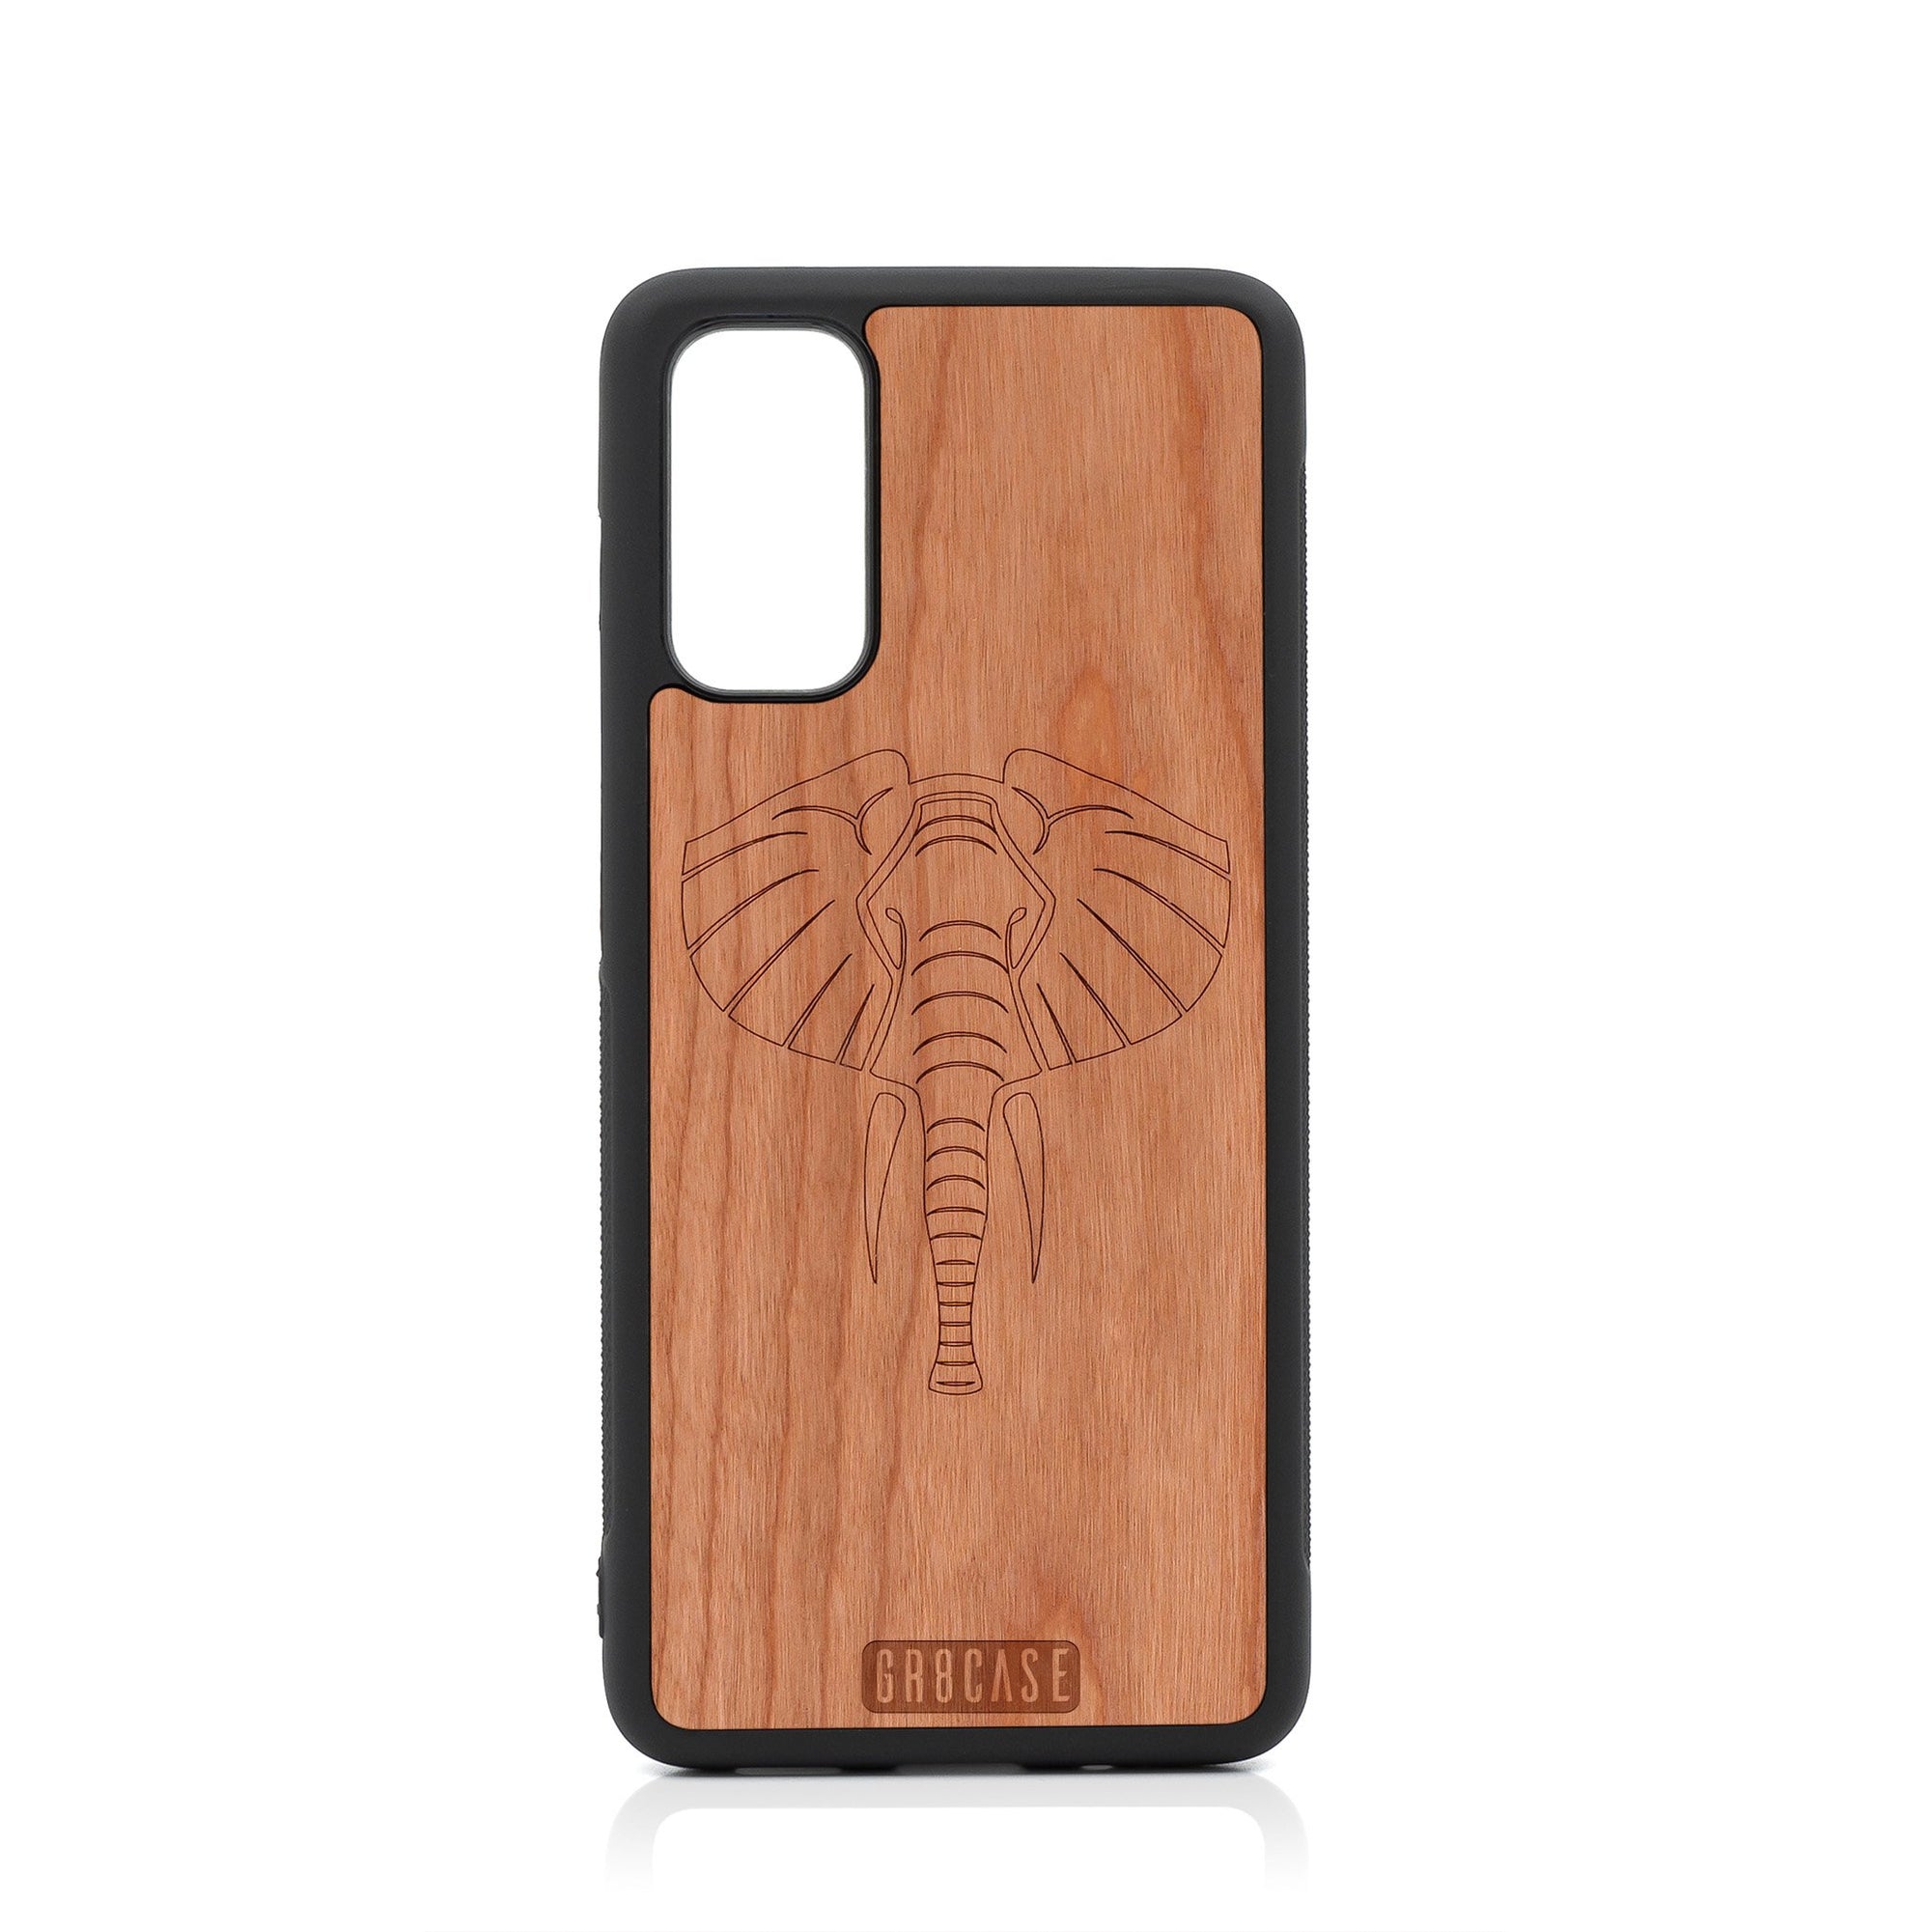 Elaphant Design Wood Case For Samsung Galaxy S20 FE 5G by GR8CASE